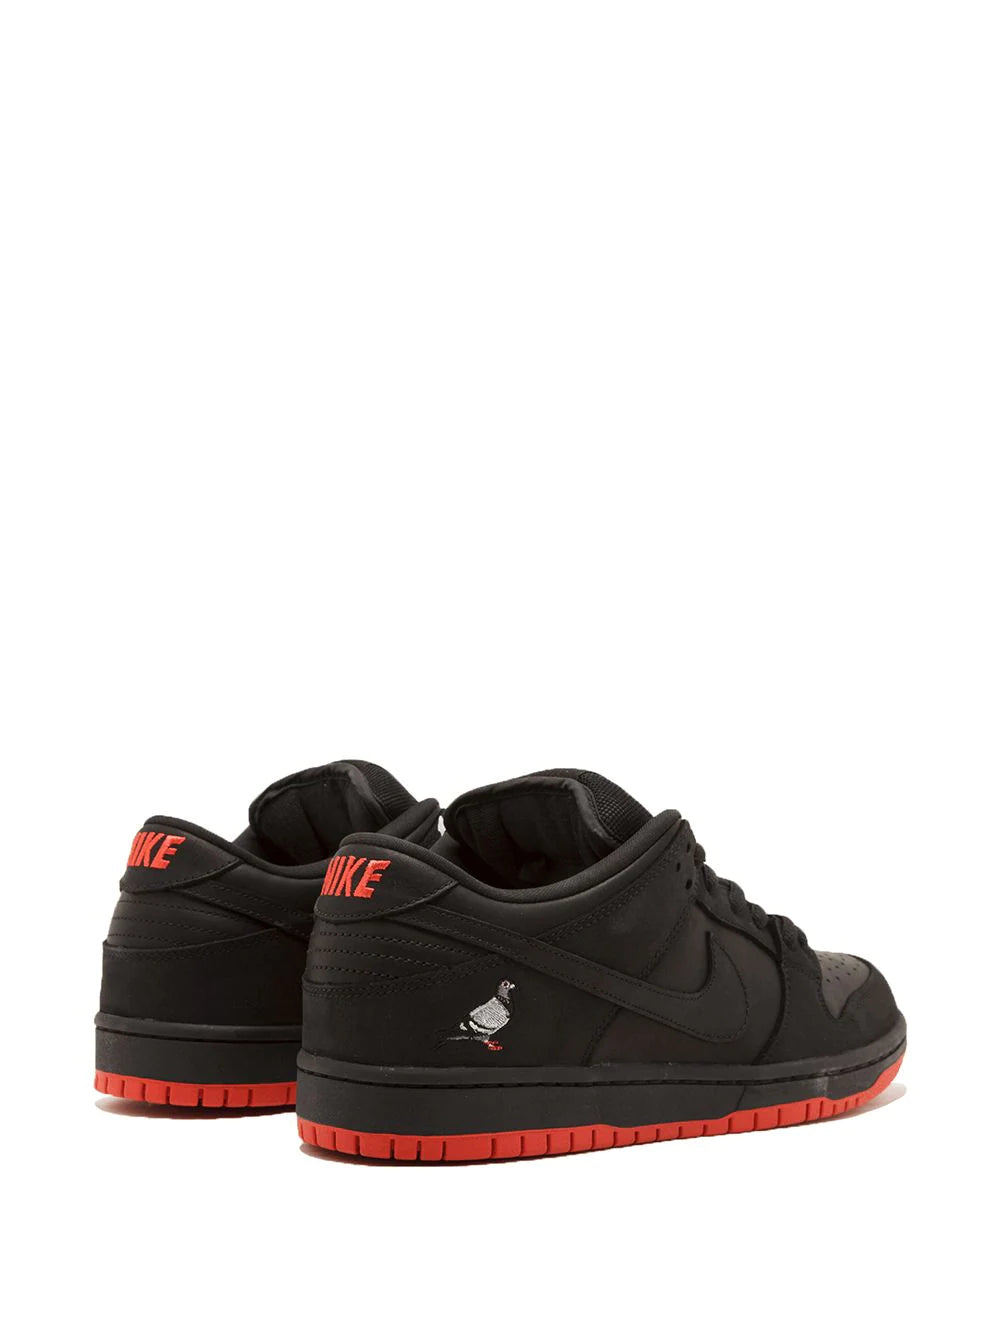 Nike SB Dunk Low TRD QS Black Pigeon sneakers